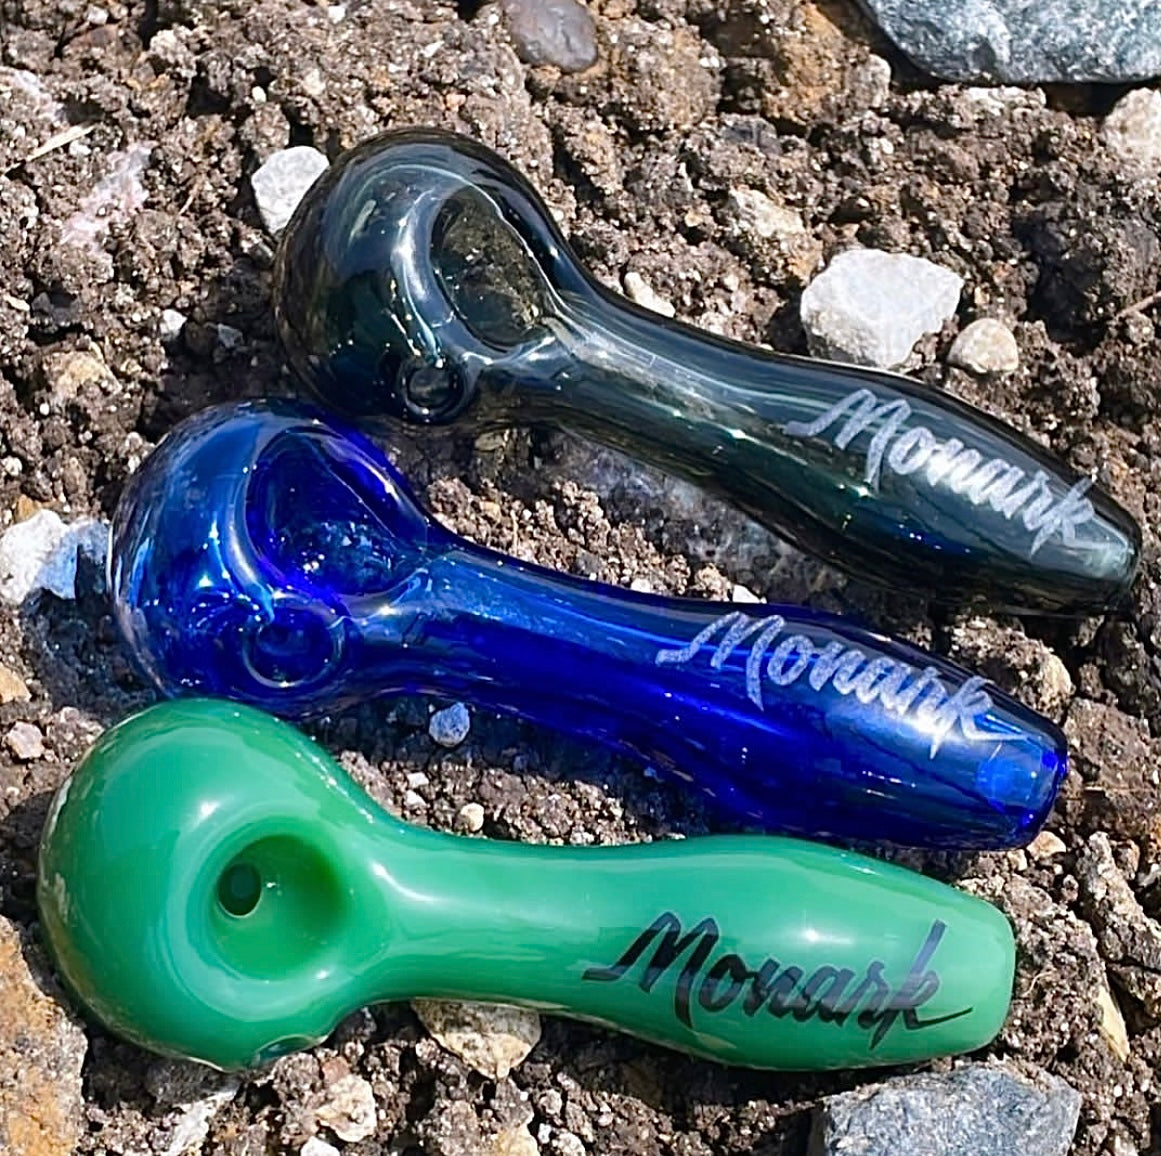 Monark full color pipe